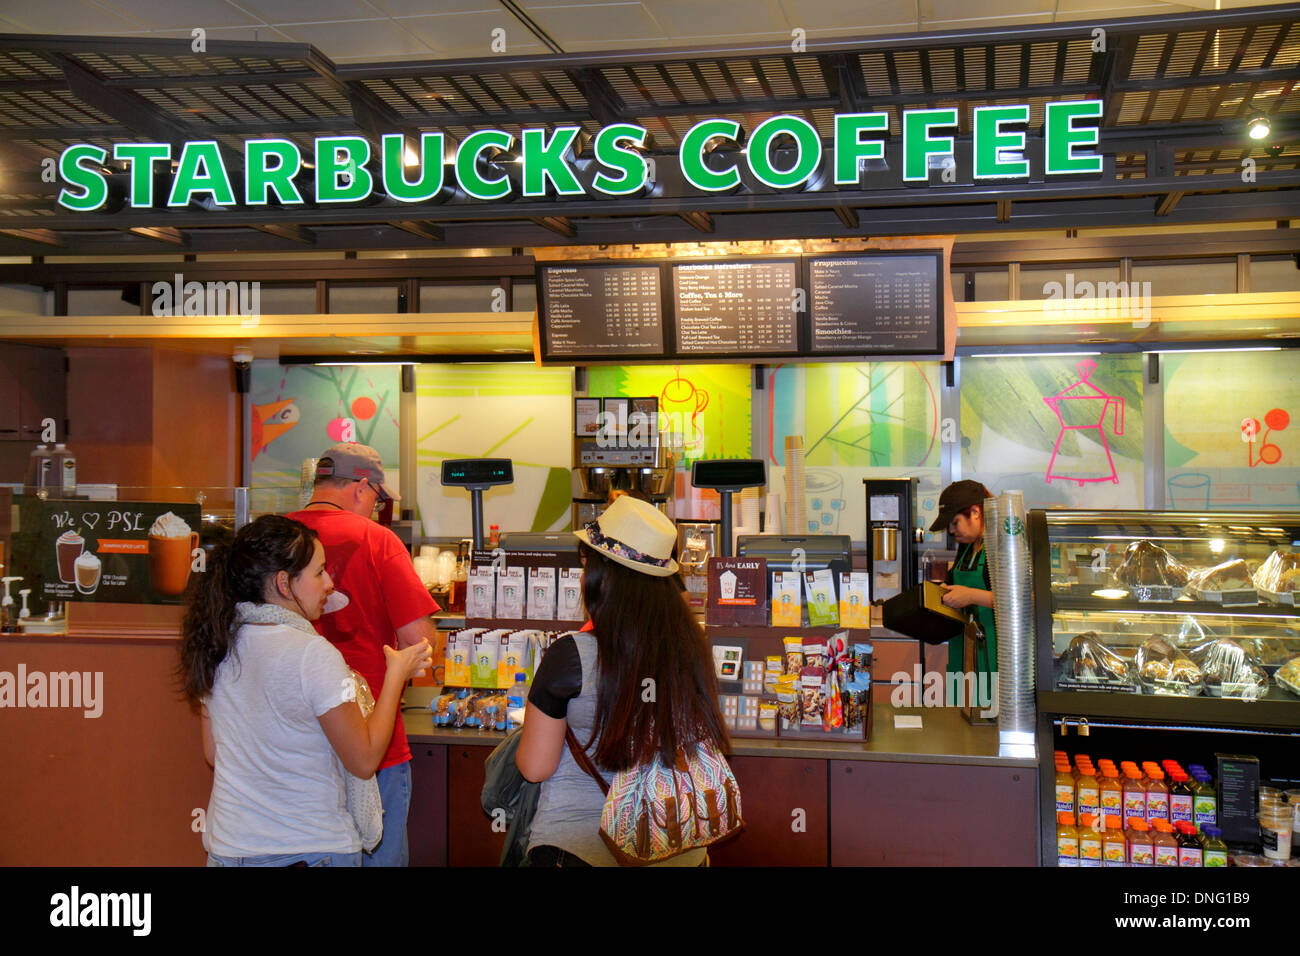 Texas,Houston,TX,Southwest,George Bush Intercontinental Airport,IAH,terminal,gate,Starbucks Coffee,barista,cafe,counter,customers,line,queue,adult,adu Stock Photo